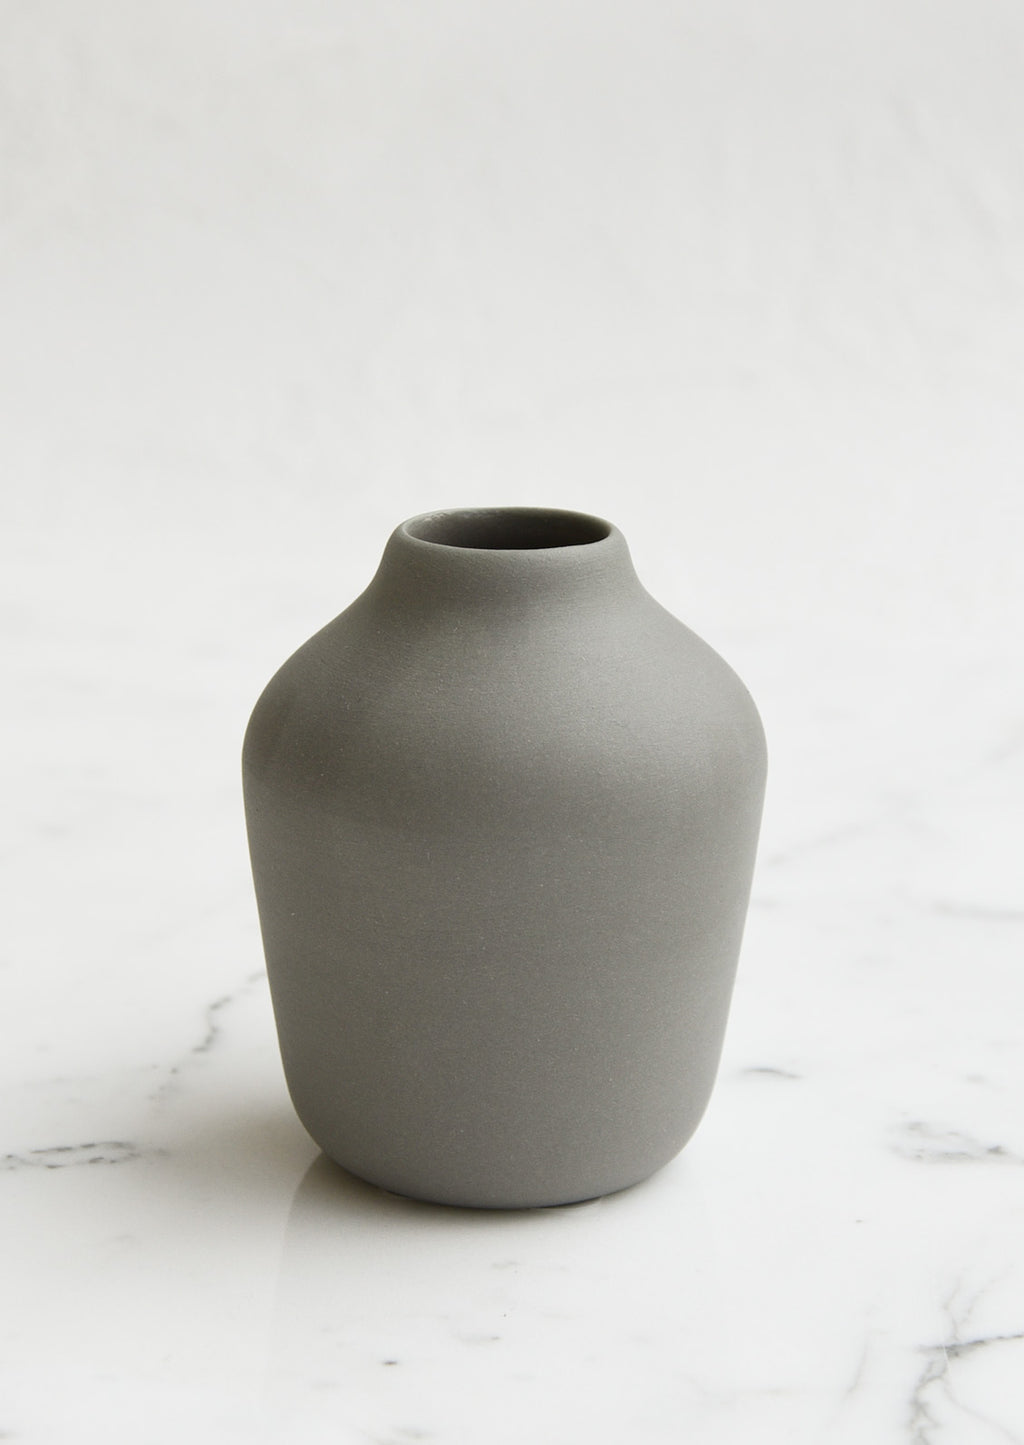 Charcoal: A charcoal colored porcelain bud vase.